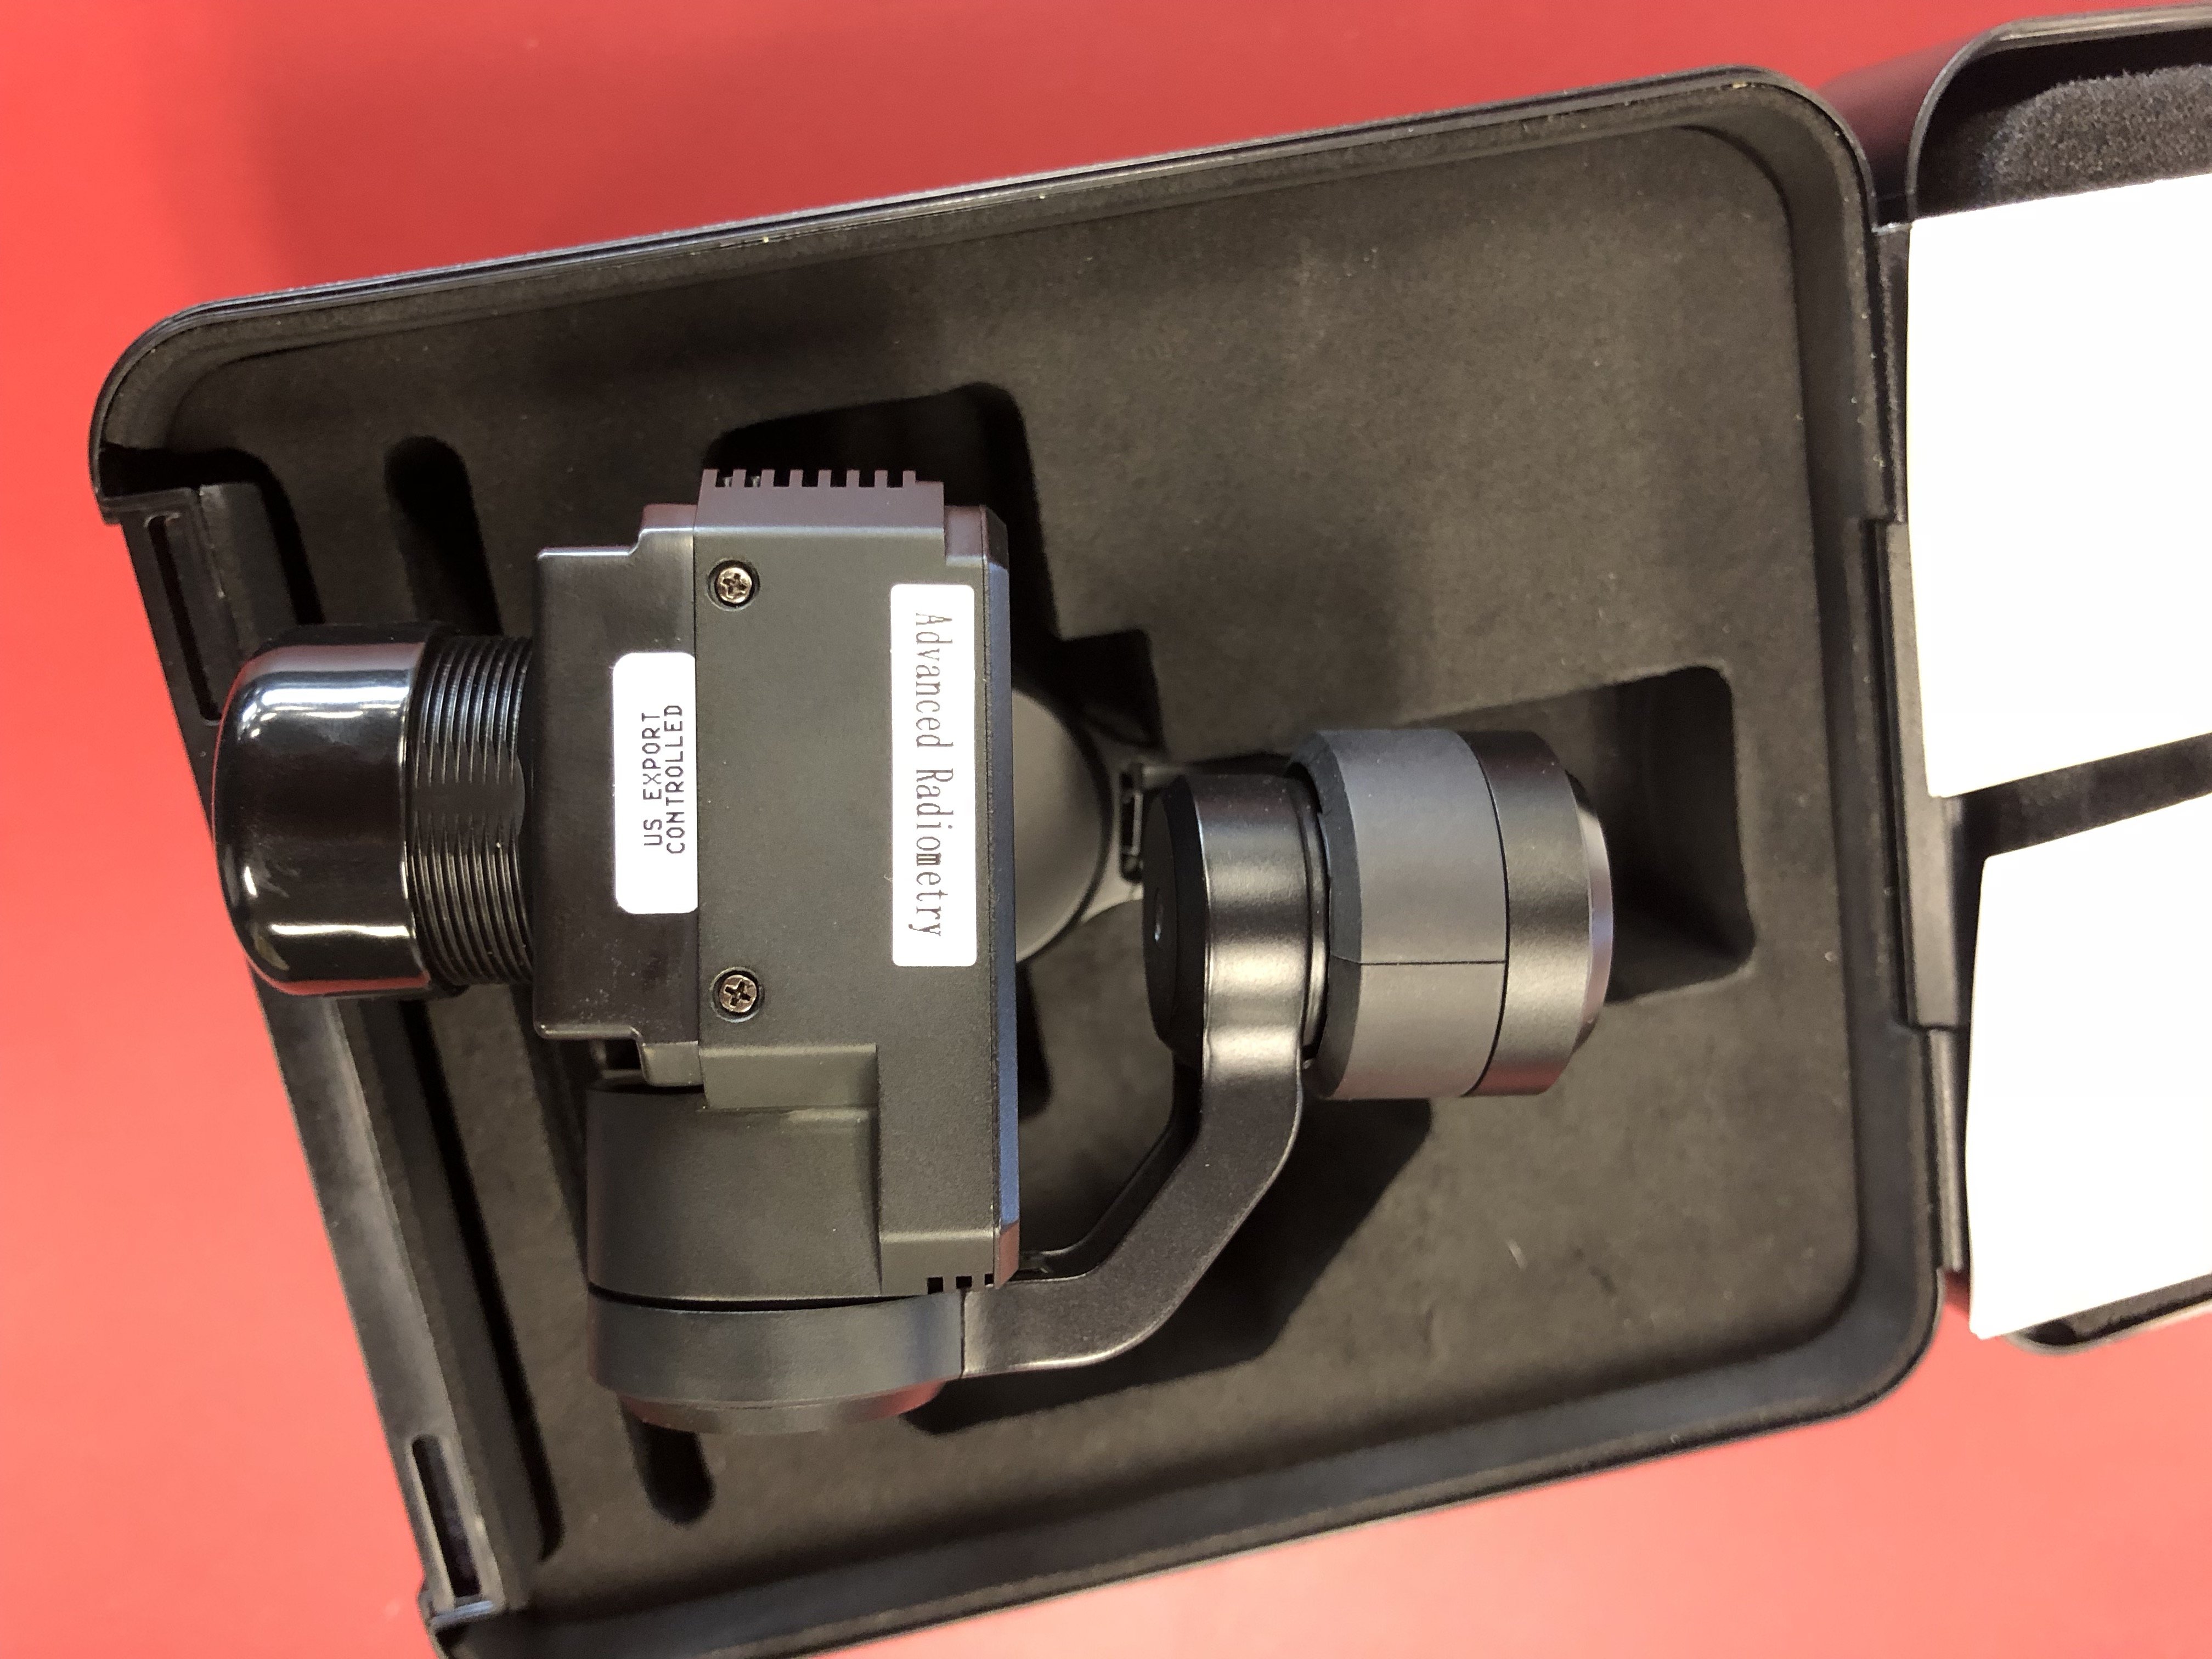 DJI Zenmuse XTR: 640 x 512, 30Hz, 13mm lens with Adv Radiometry